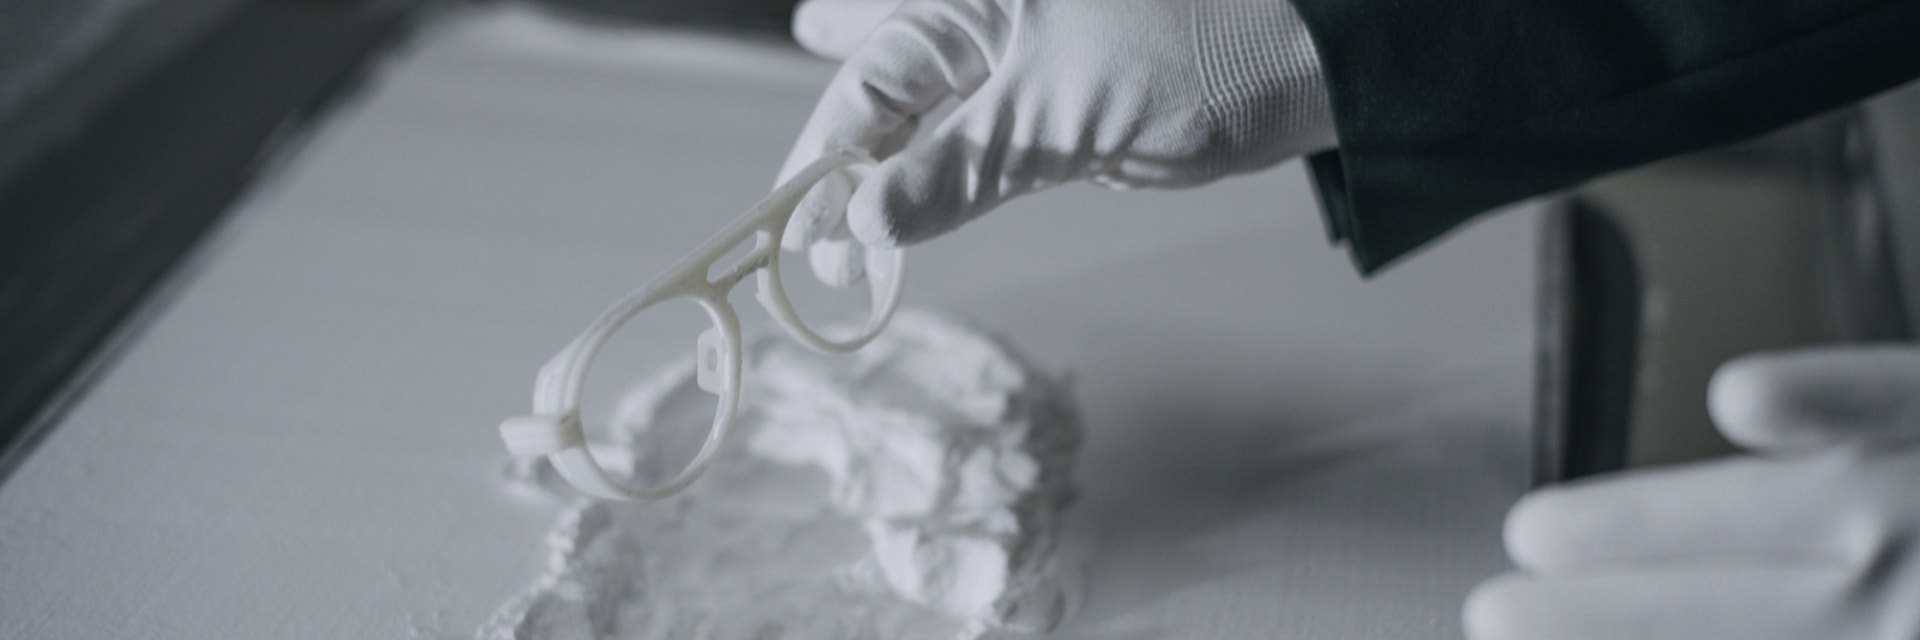 Manos enguantadas retirando monturas de gafas Odette Lunettes impresas en 3D de un lecho de polvo